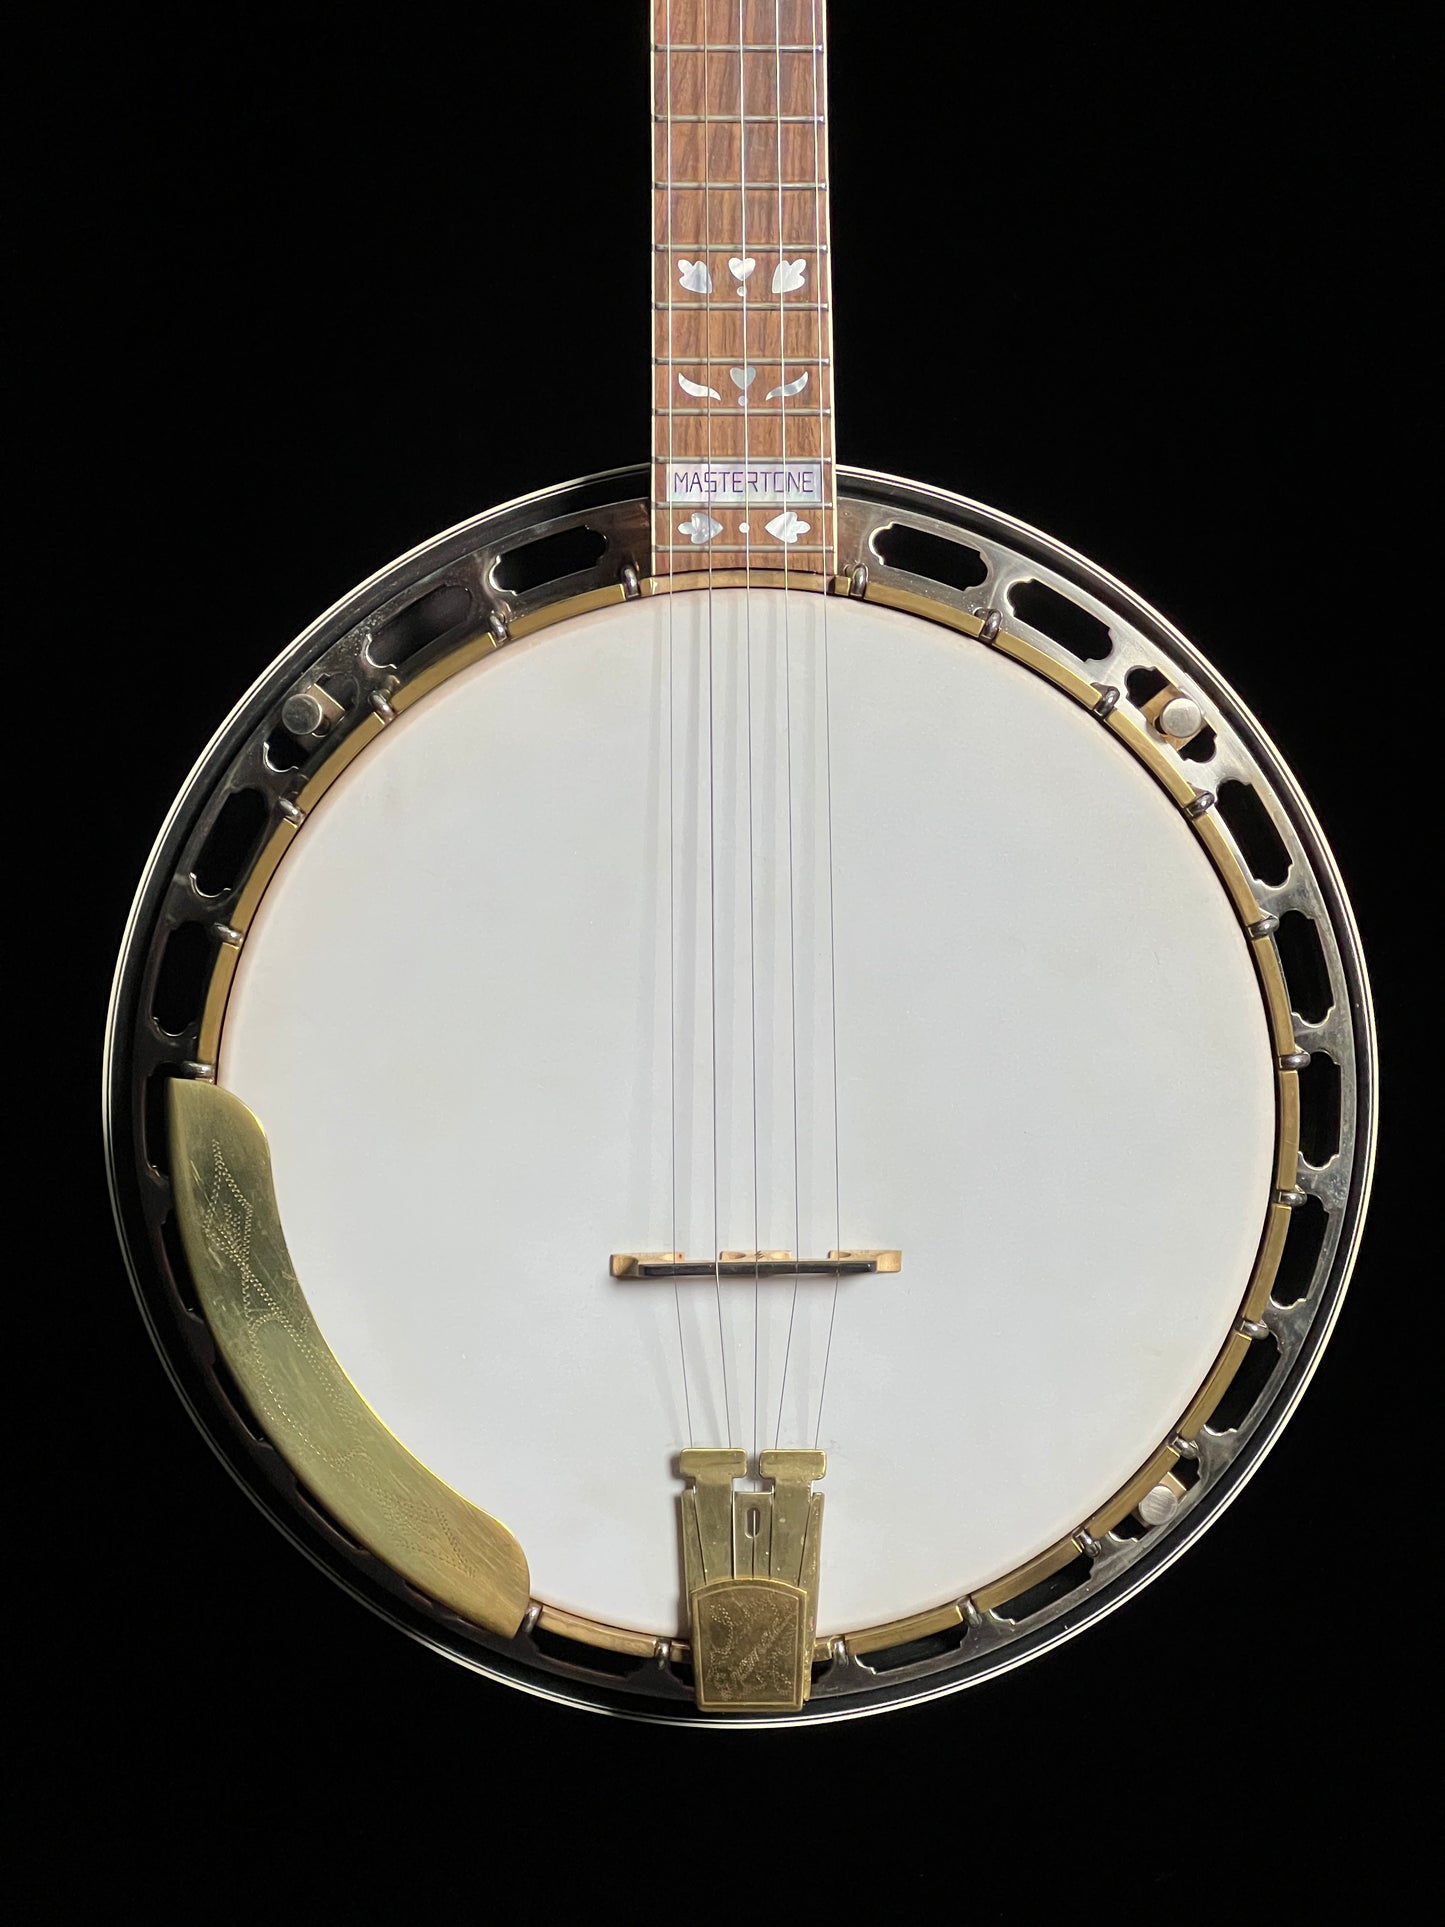 2009 Gibson Granada 5-String Banjo with Maple Resonator 1 of 20 - Used